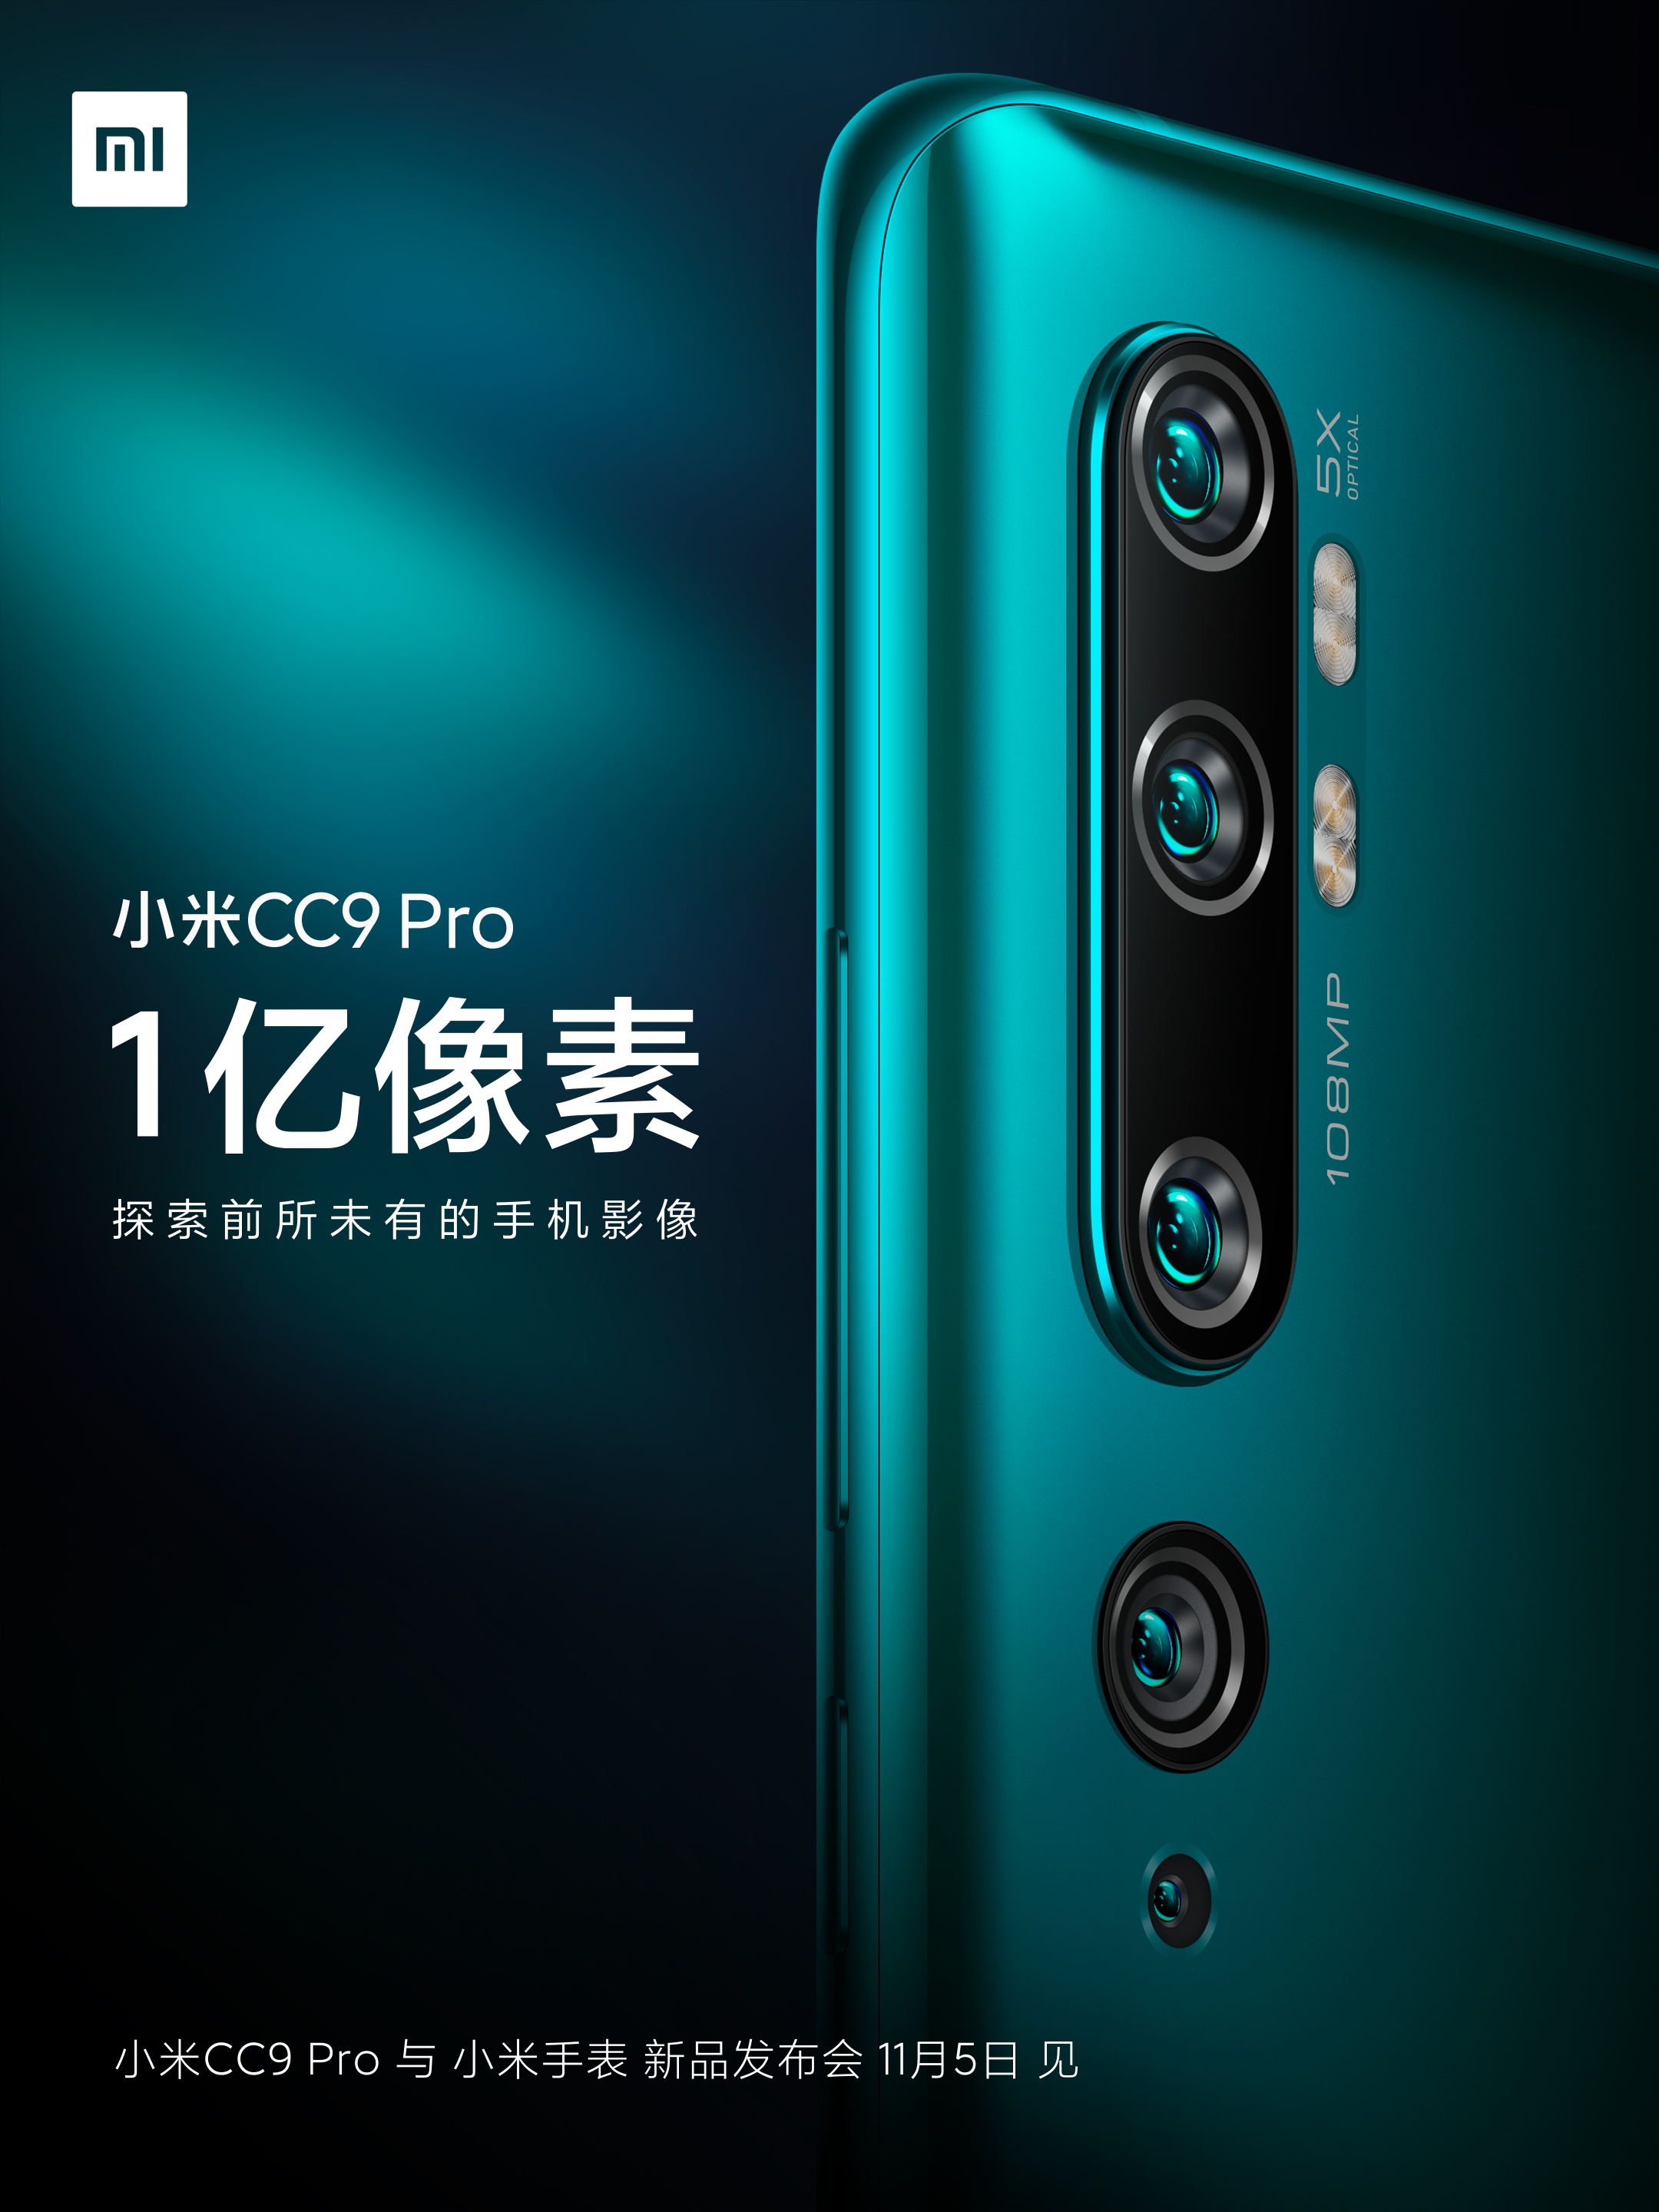 Xiaomi To Launch Mi CC9 Pro On November 5th